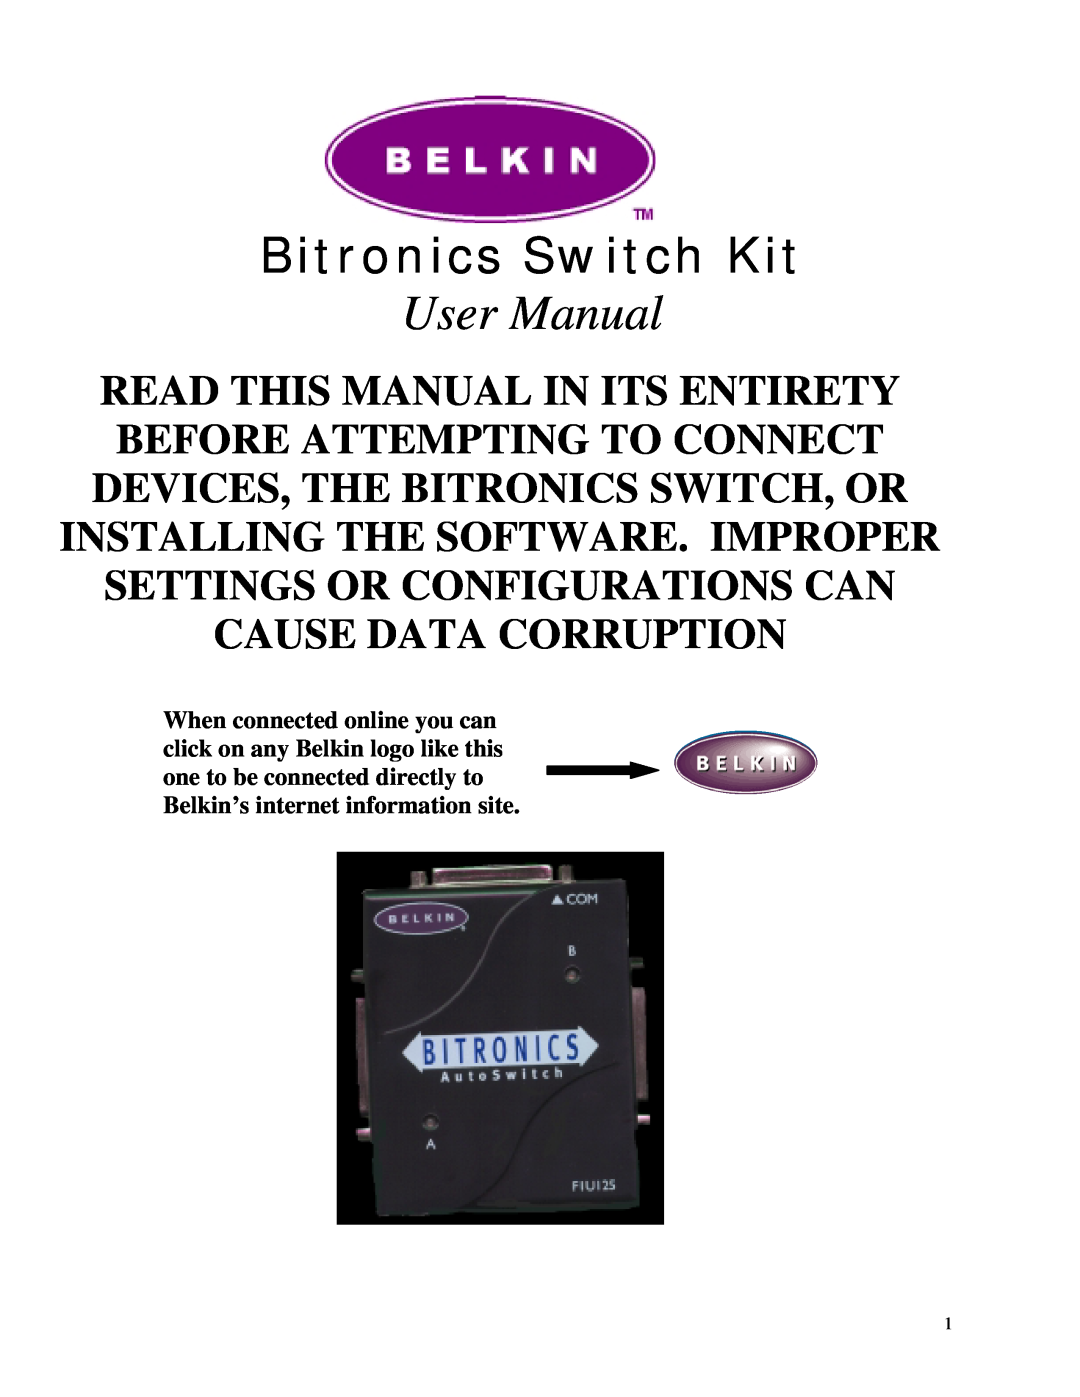 Belkin WINDOWS NT/2k/XP manual Bitronics Switch Kit, User Manual 